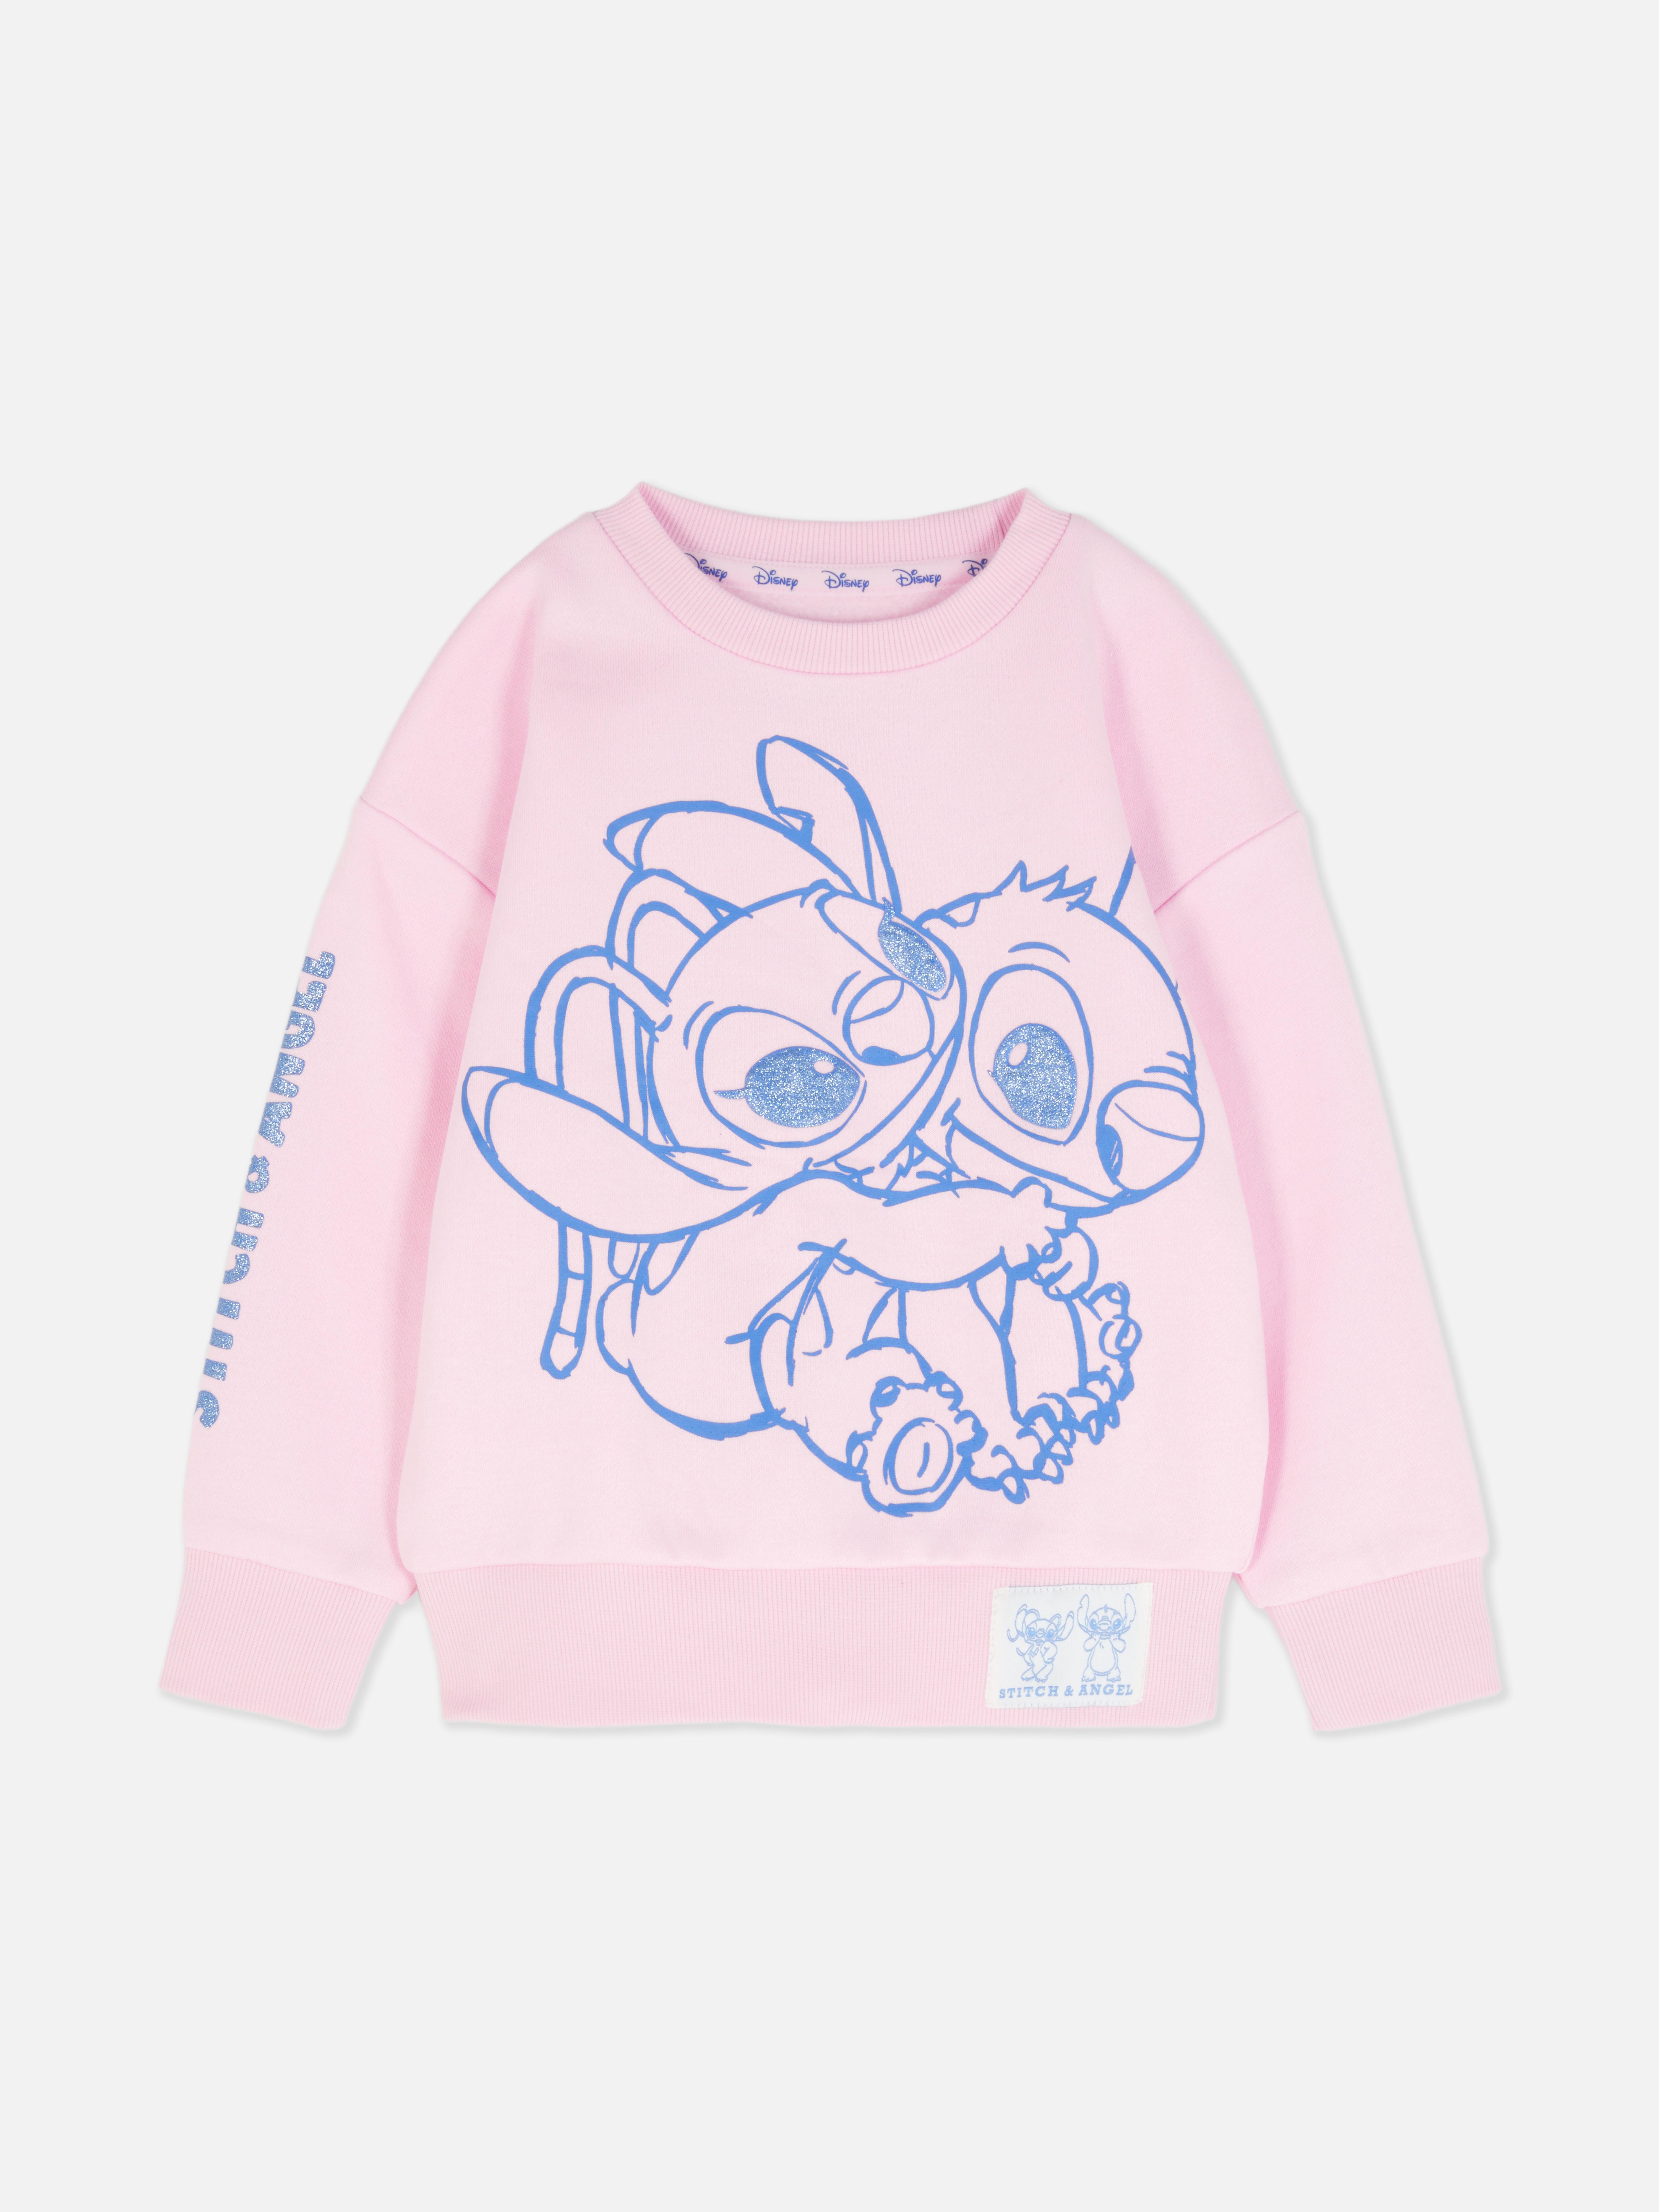 Disney’s Lilo & Stitch Graphic Sweatshirt